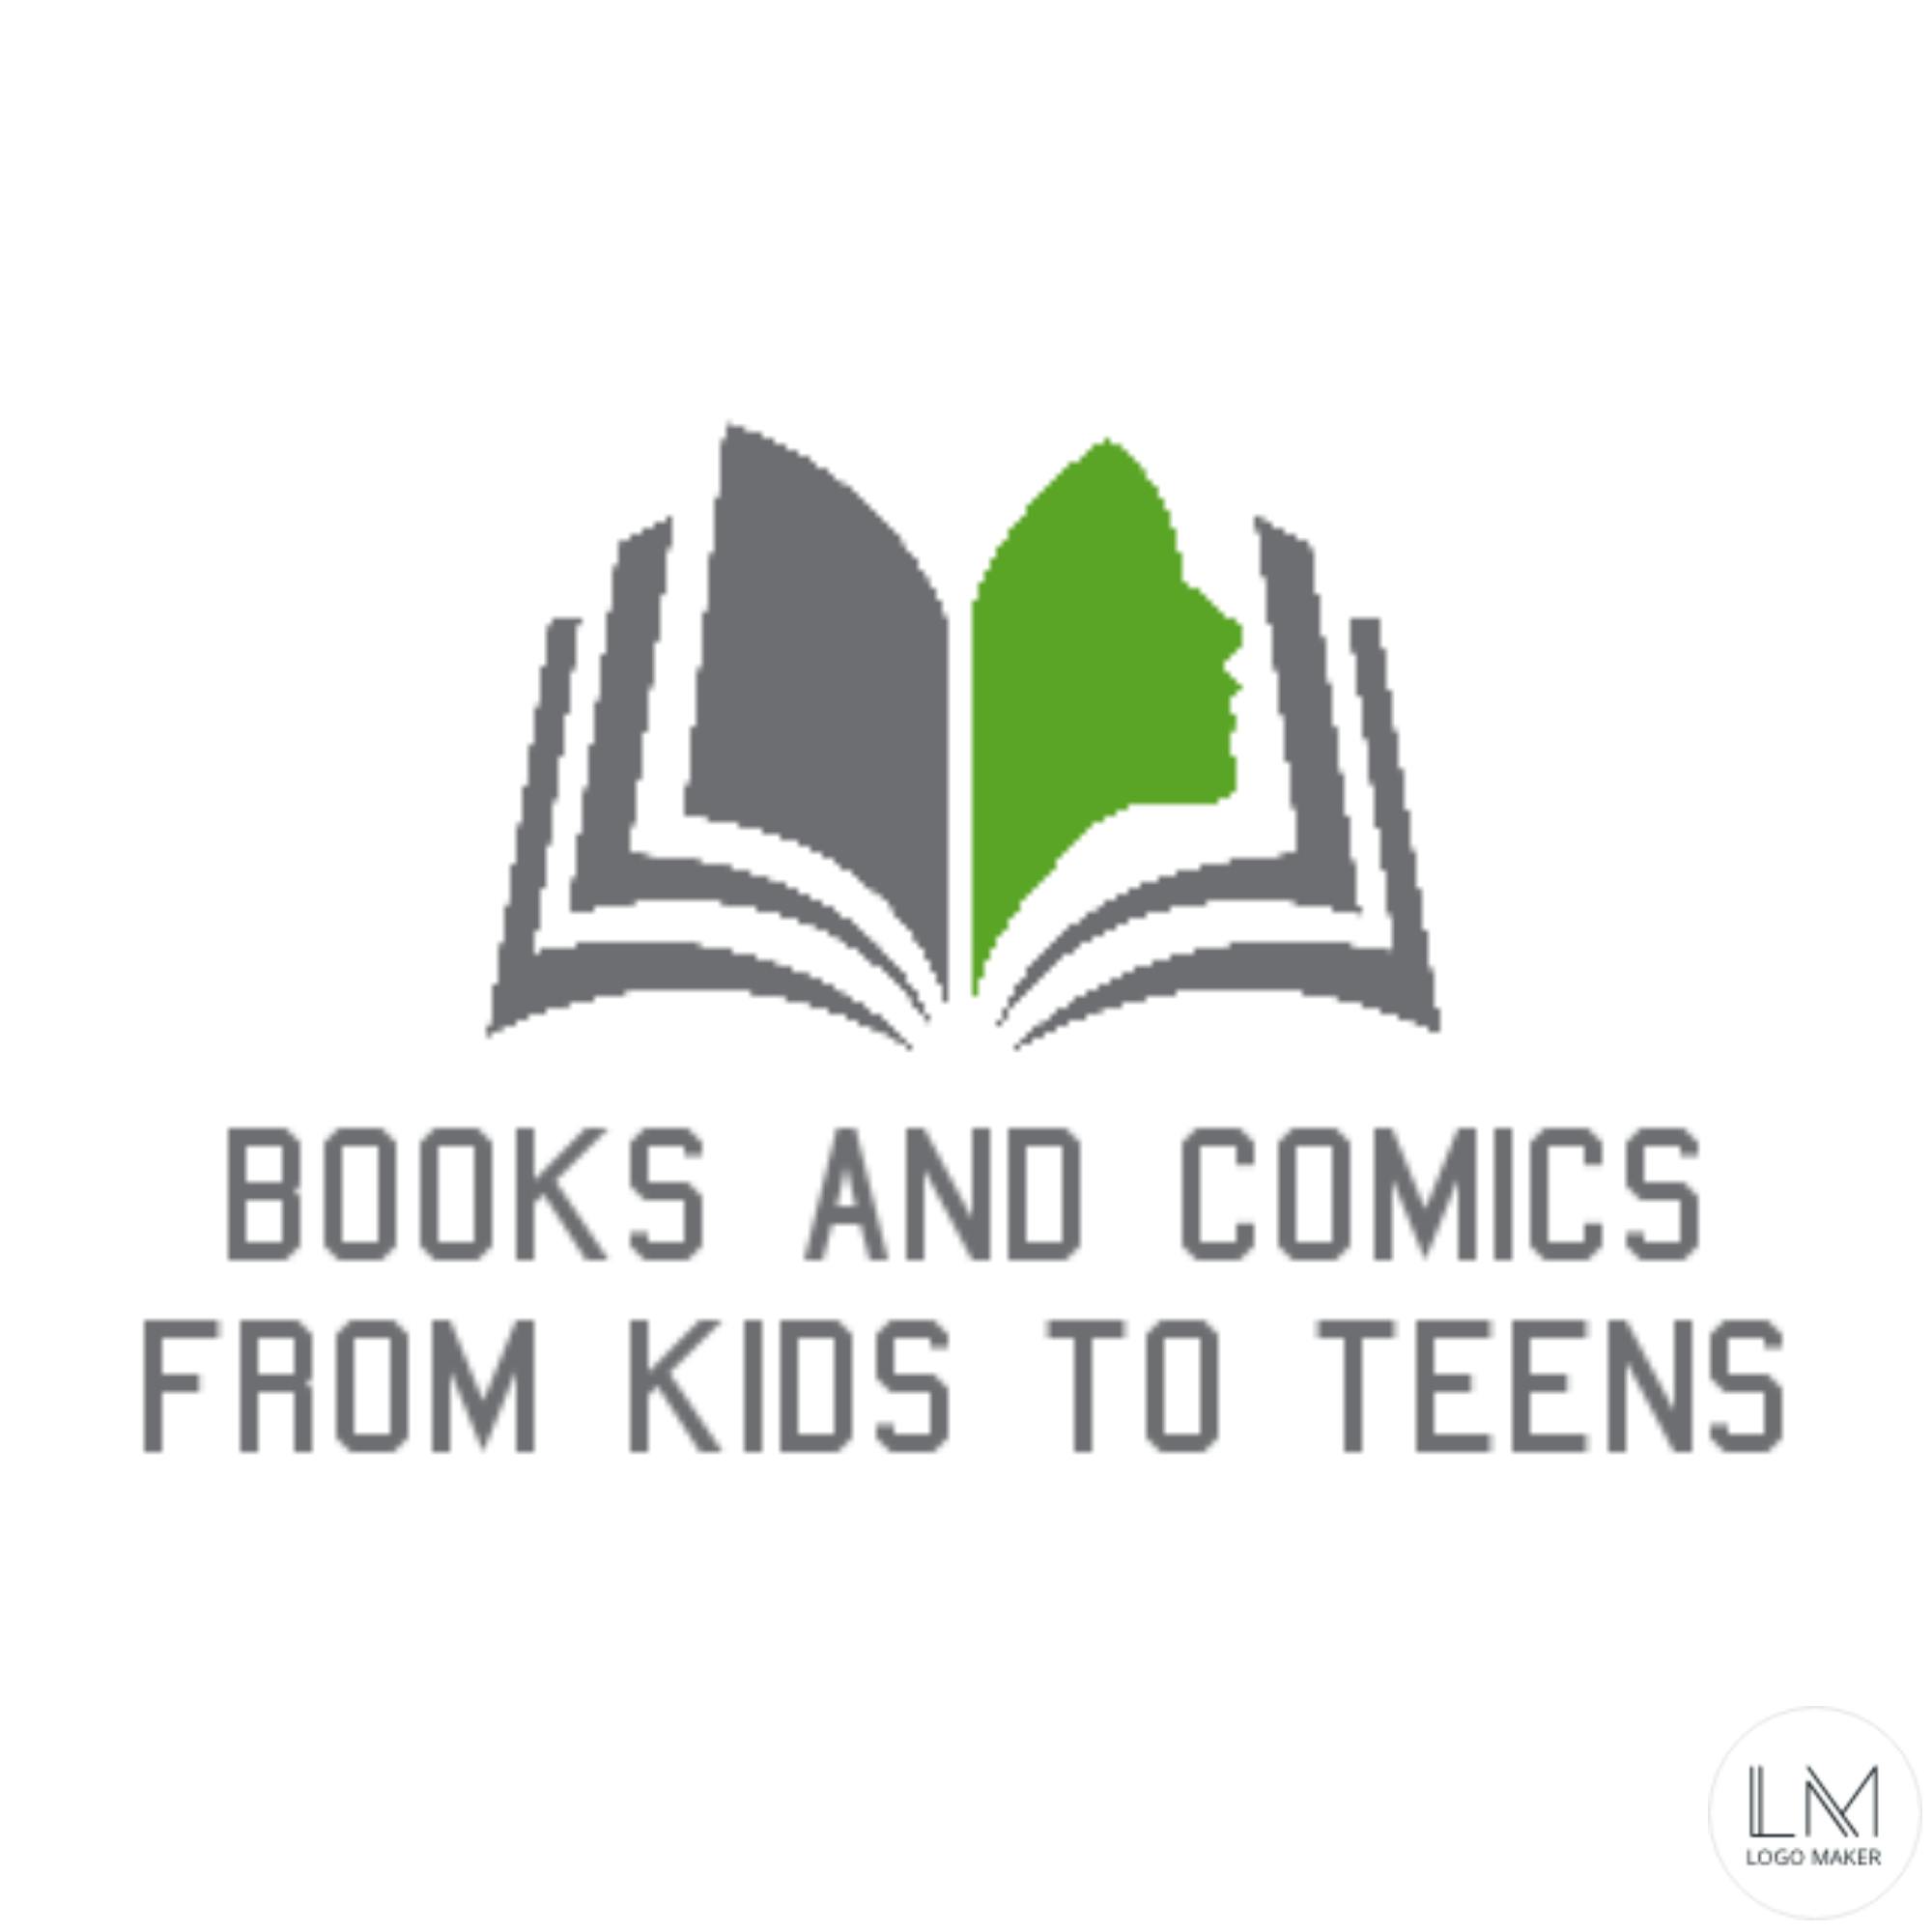 Comics And Books